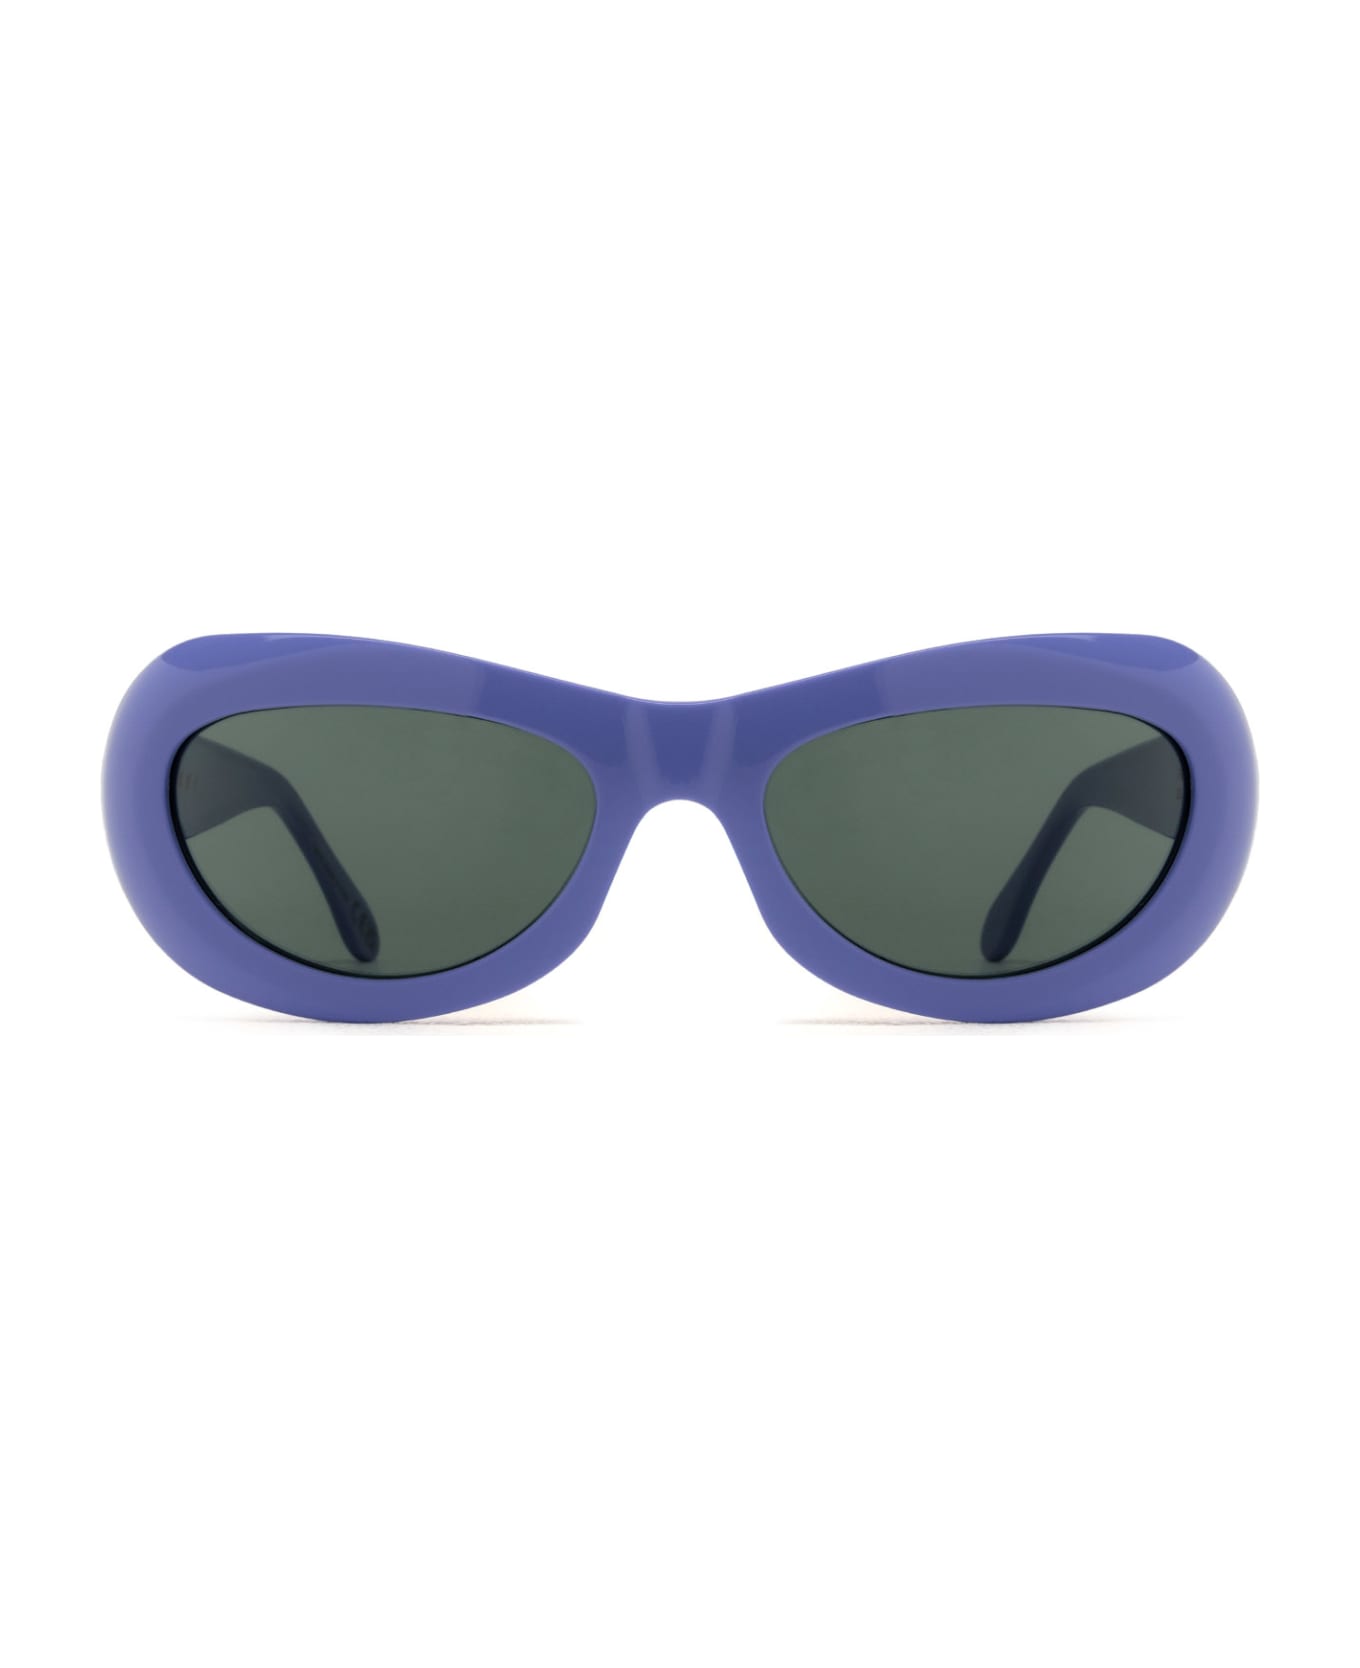 Marni Eyewear Field Of Rushes Lilac Sunglasses - Lilac サングラス